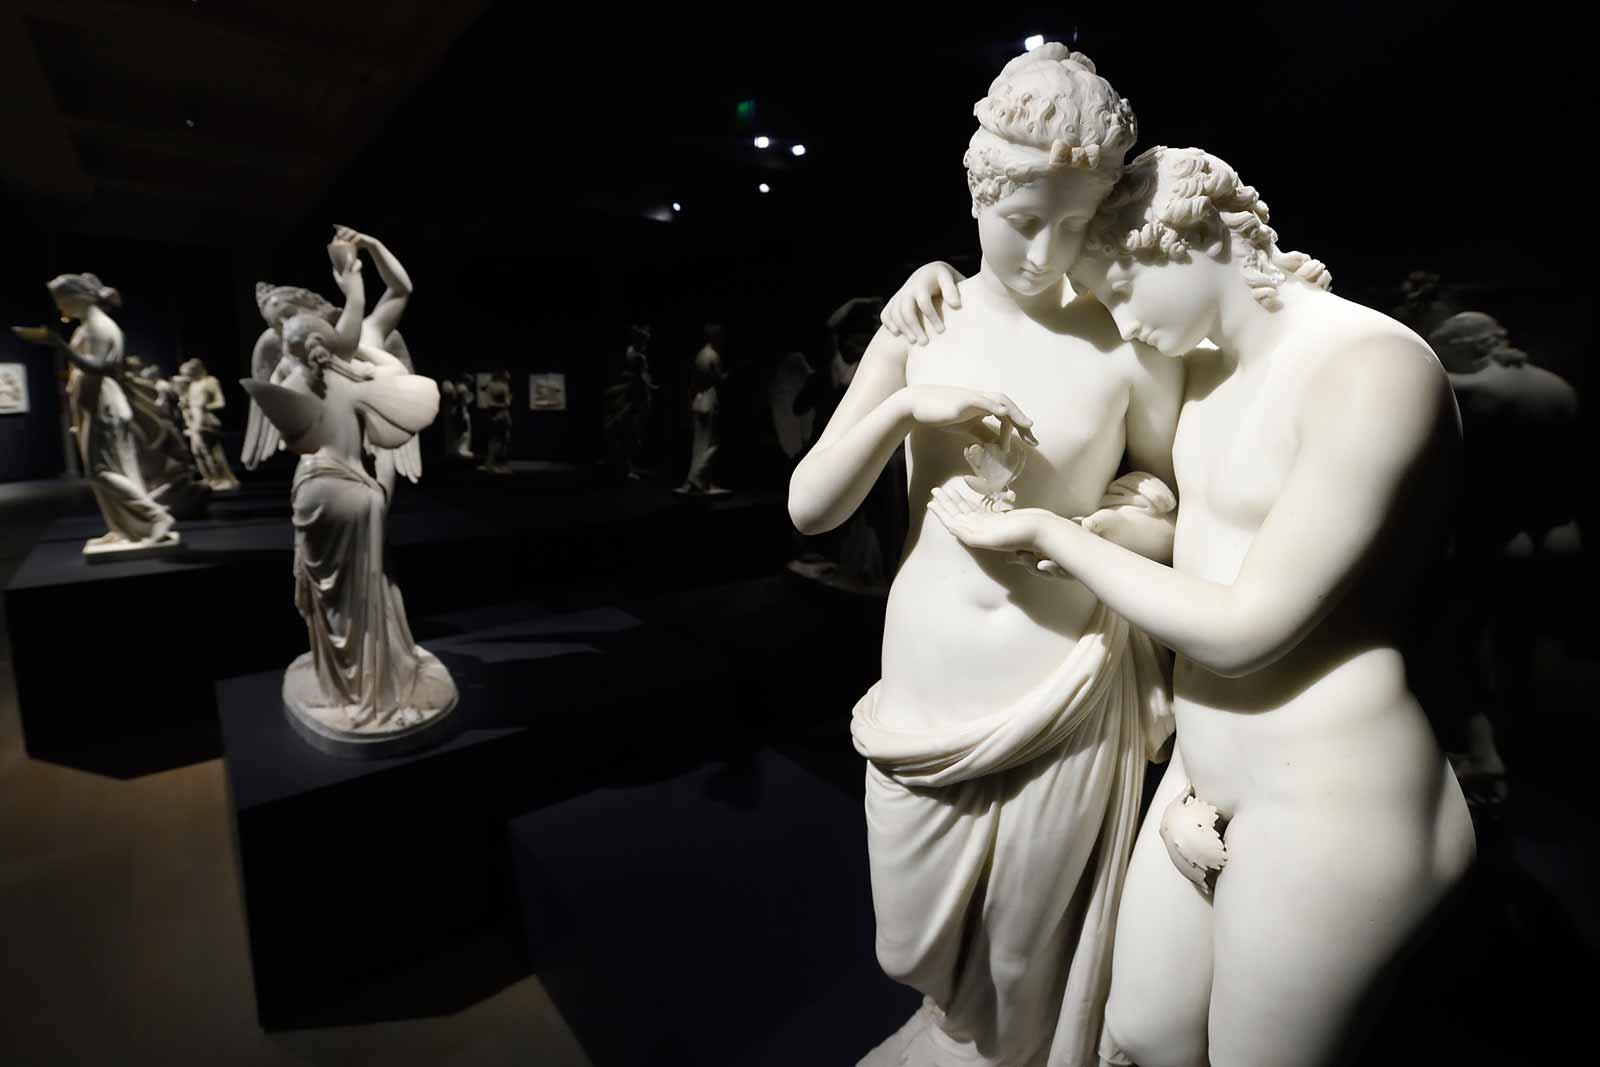 Antonio Canova, Cupid and Psyche standing, 1800 - 1803.